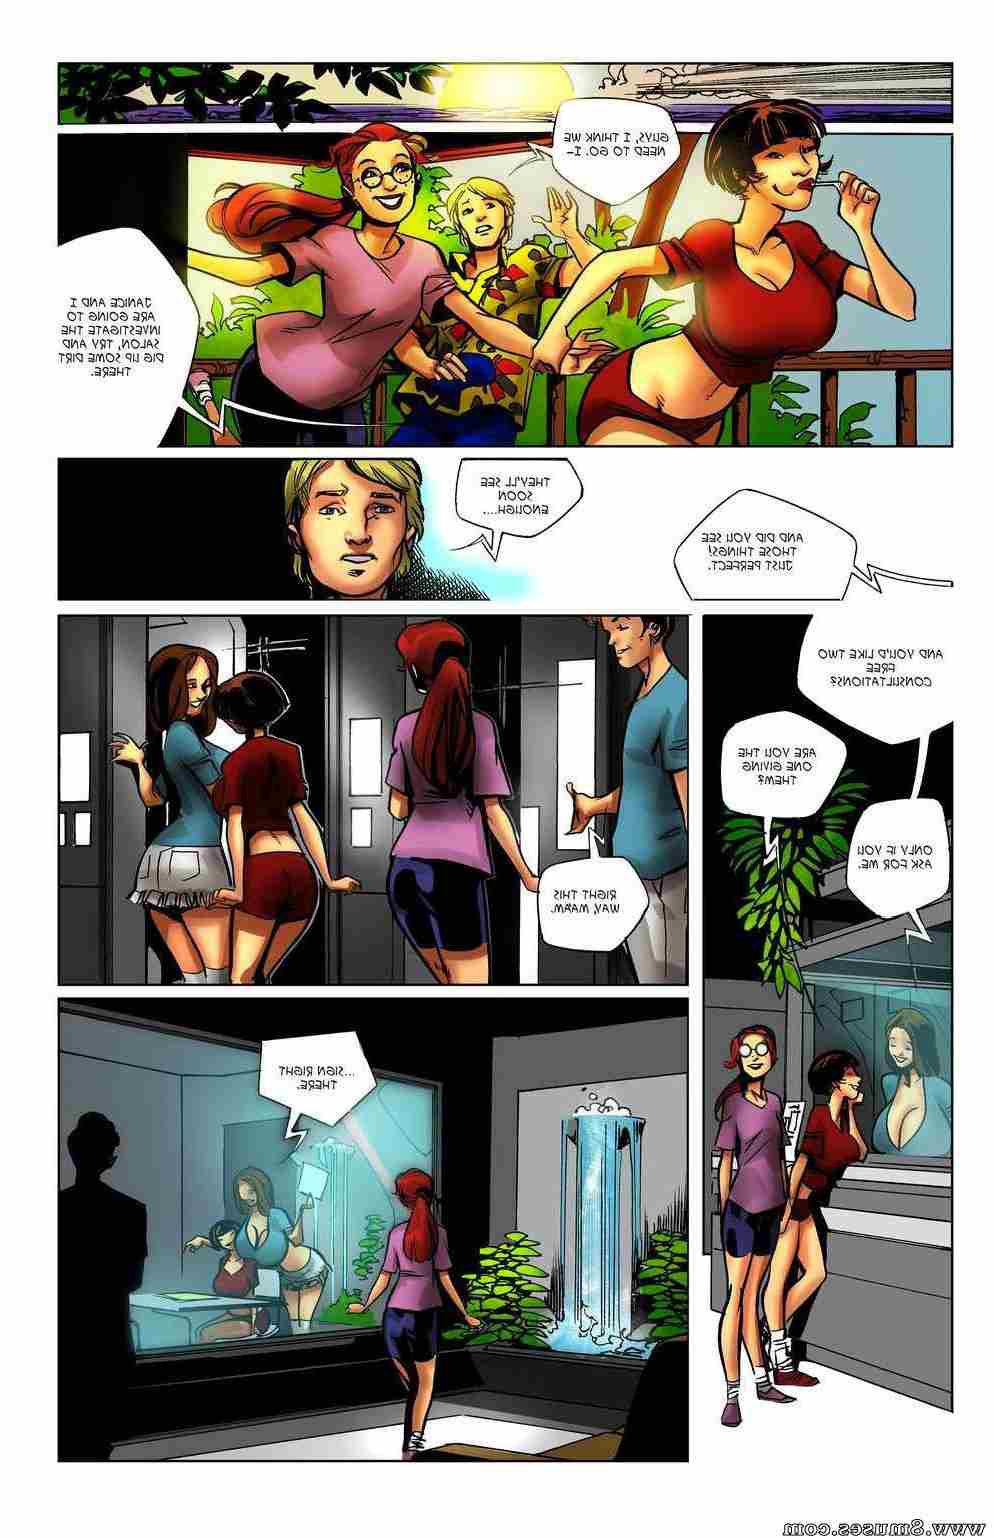 BE-Story-Club-Comics/Island-of-Dreams Island_of_Dreams__8muses_-_Sex_and_Porn_Comics_71.jpg